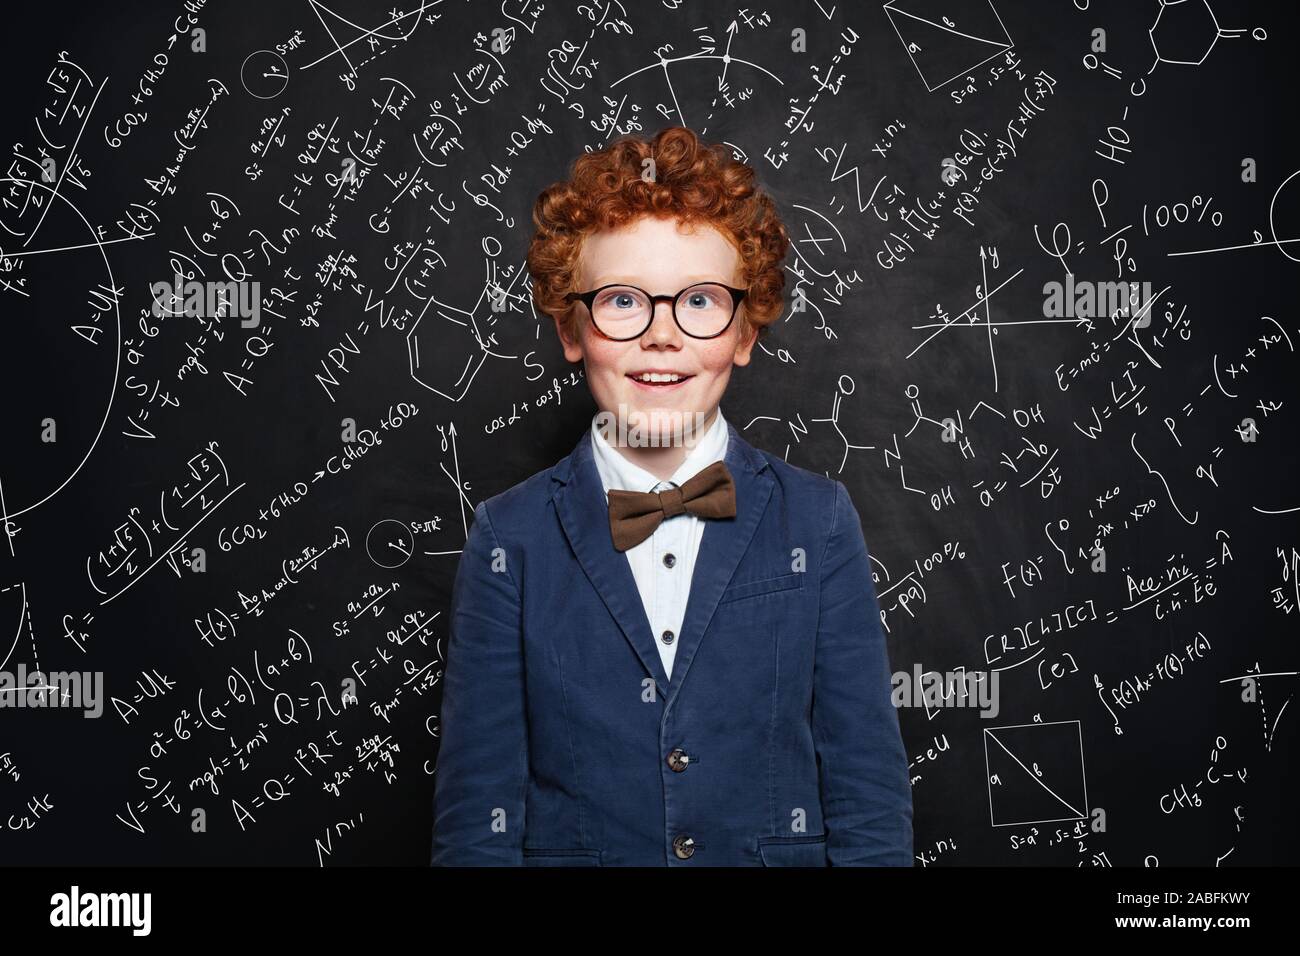 Cute redhead child in school uniform on blackboard background with science formulas Stock Photo